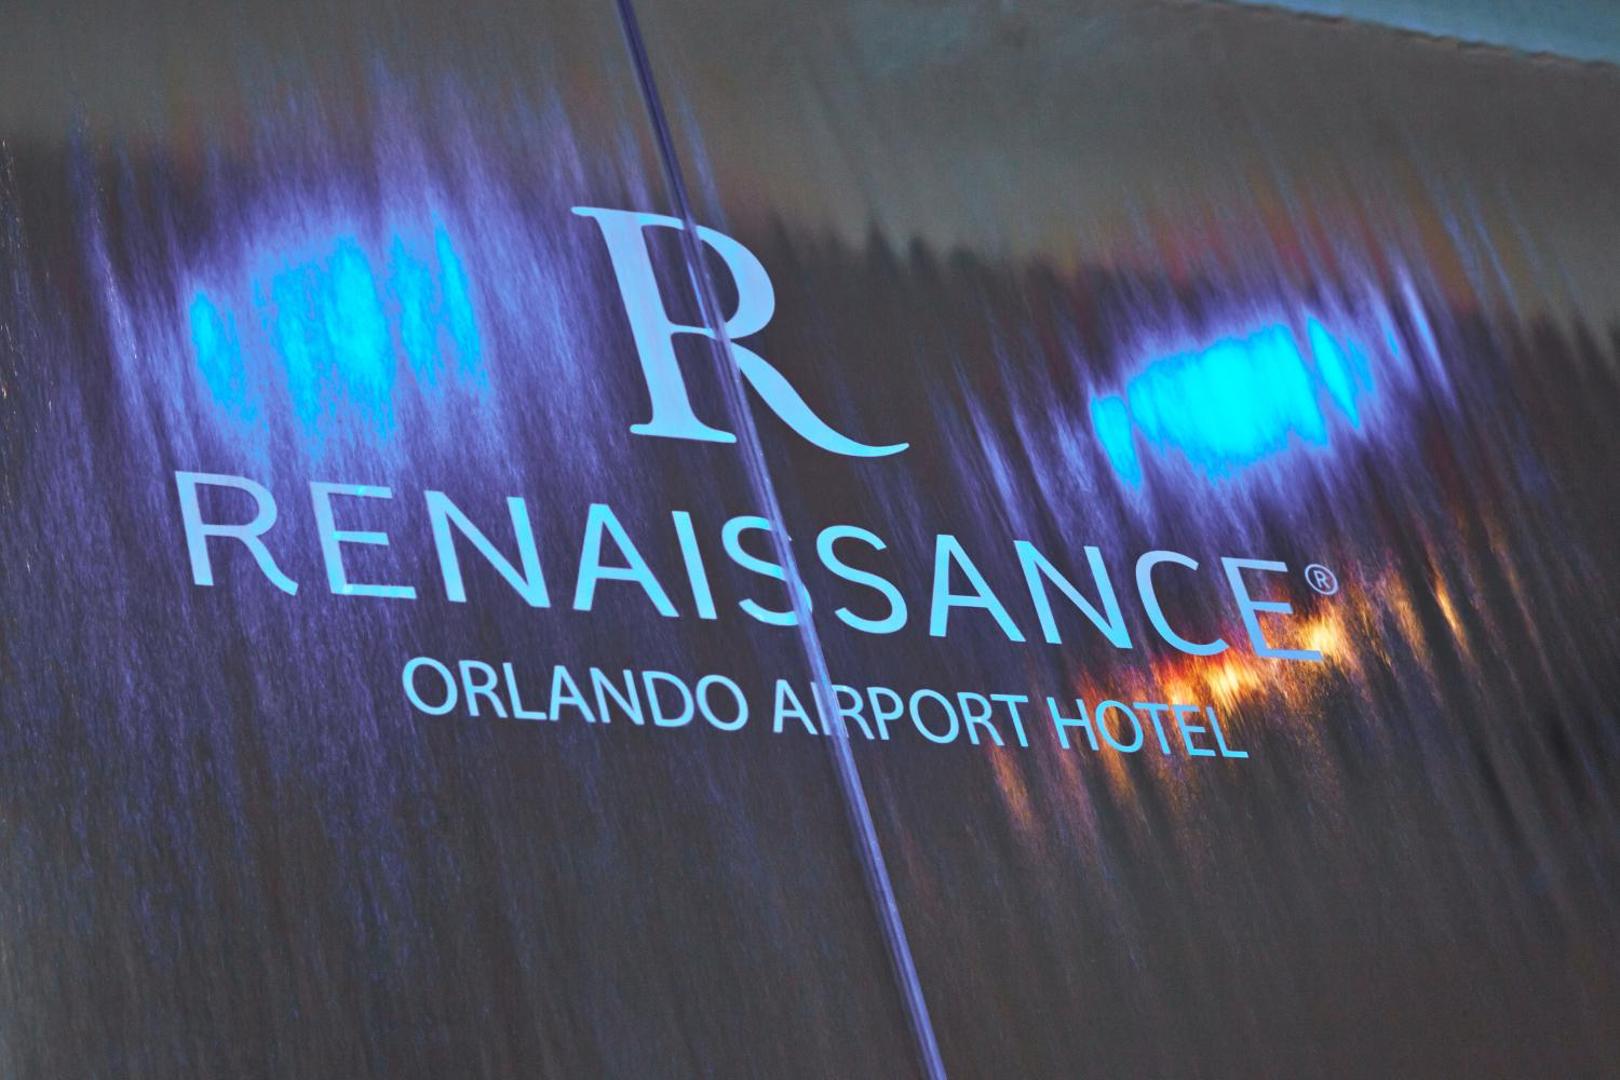 Renaissance Orlando Airport